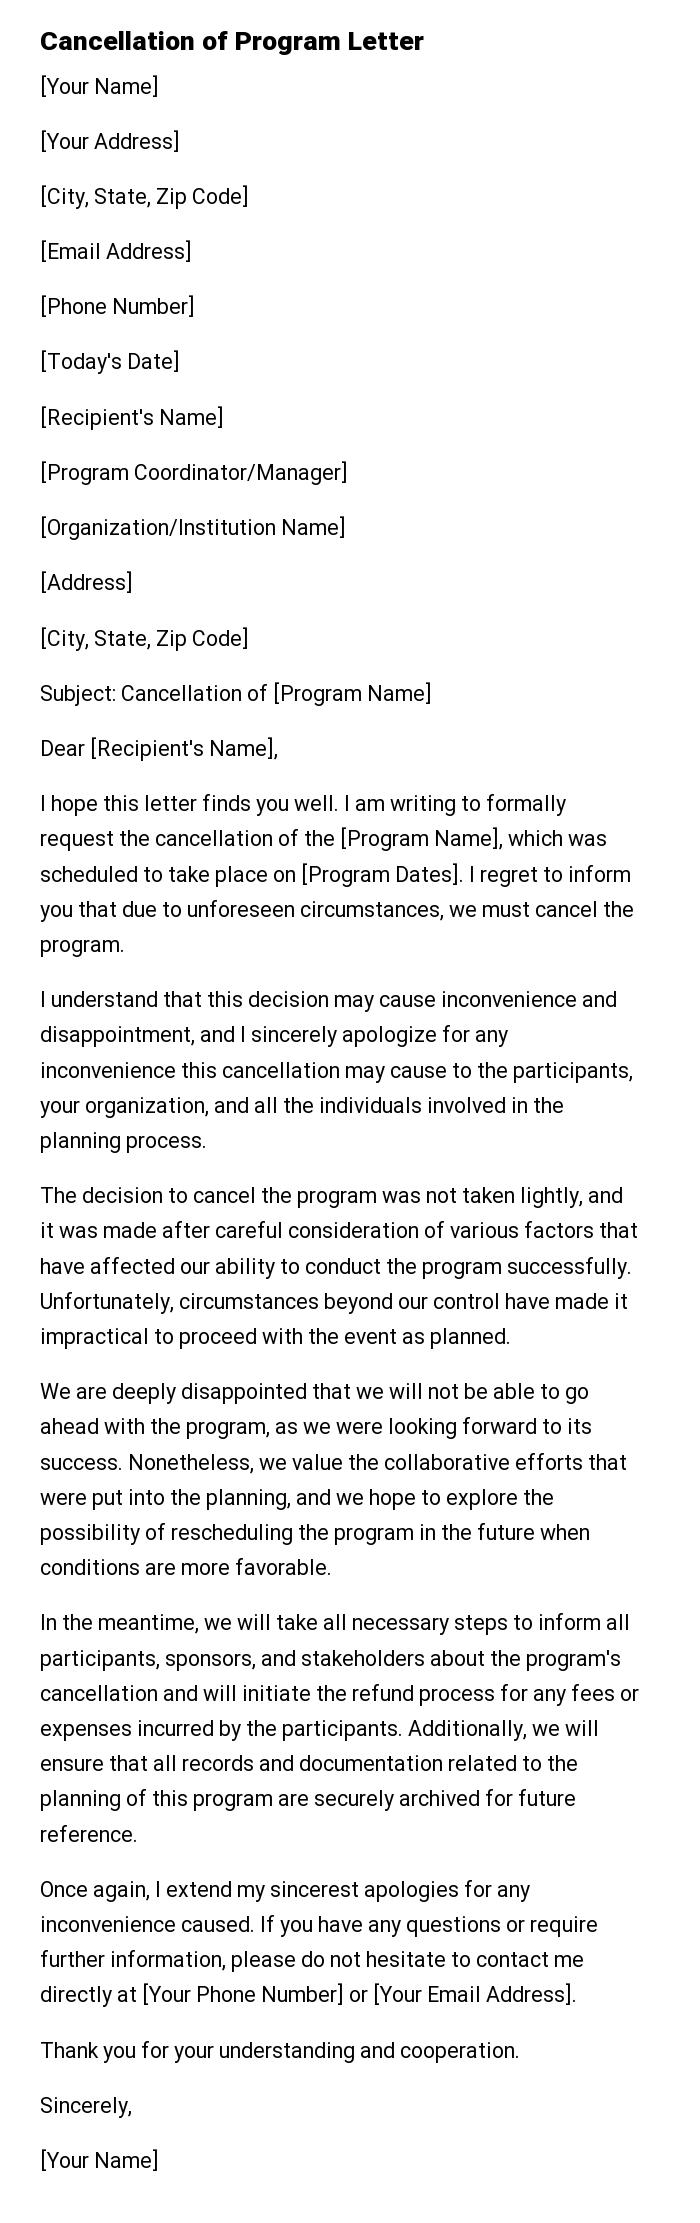 Cancellation of Program Letter